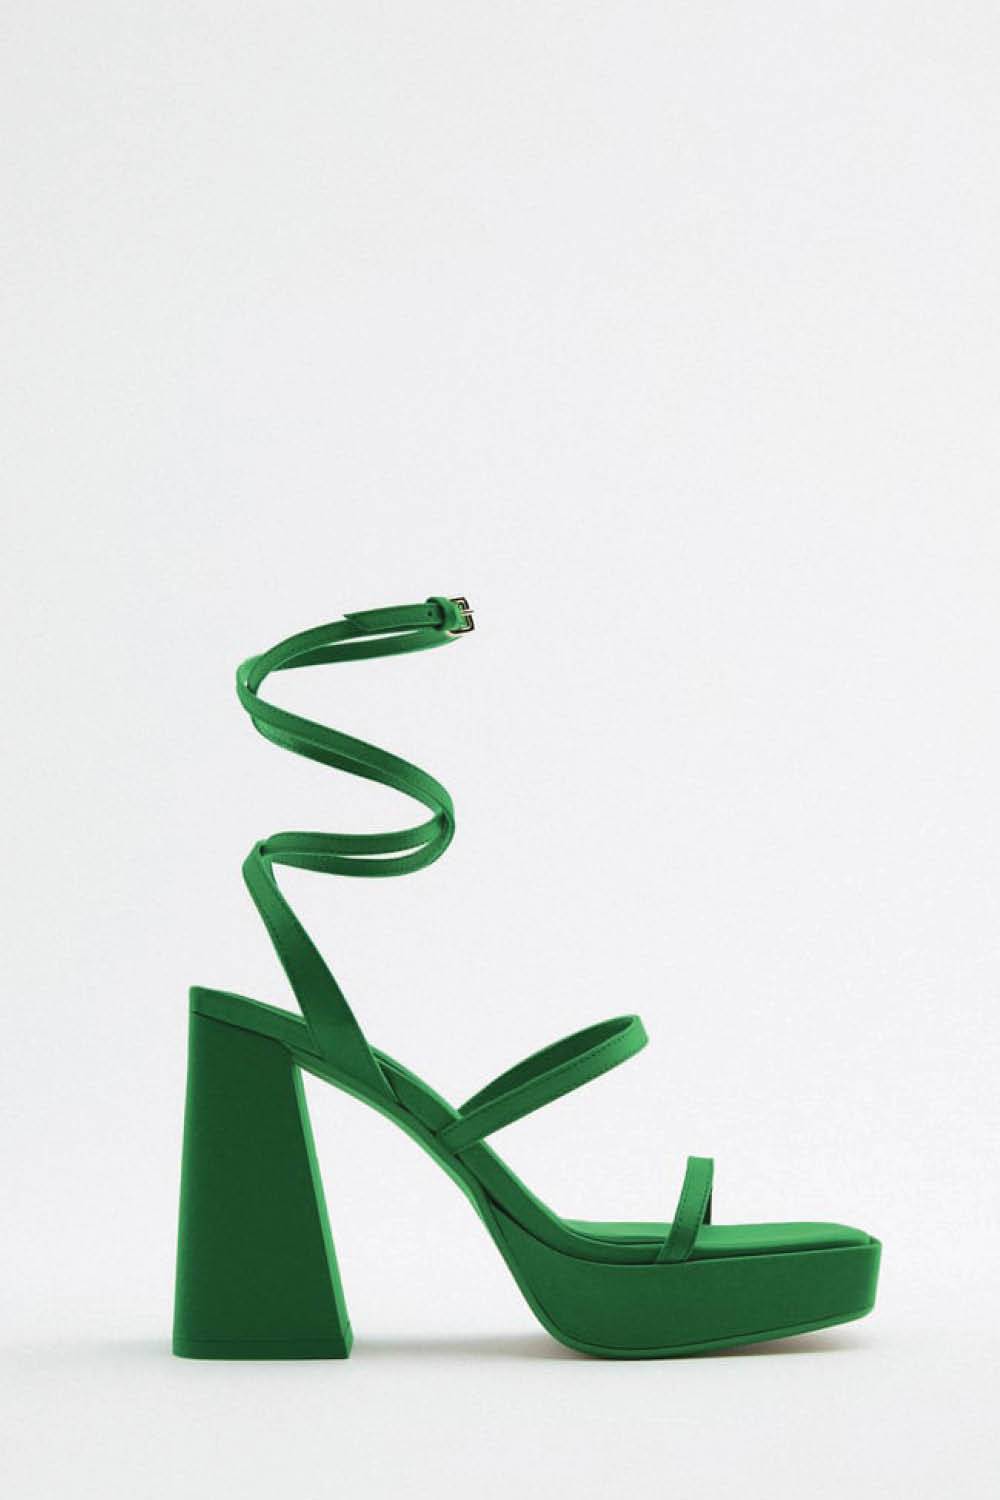 Sandalias verdes minimalistas